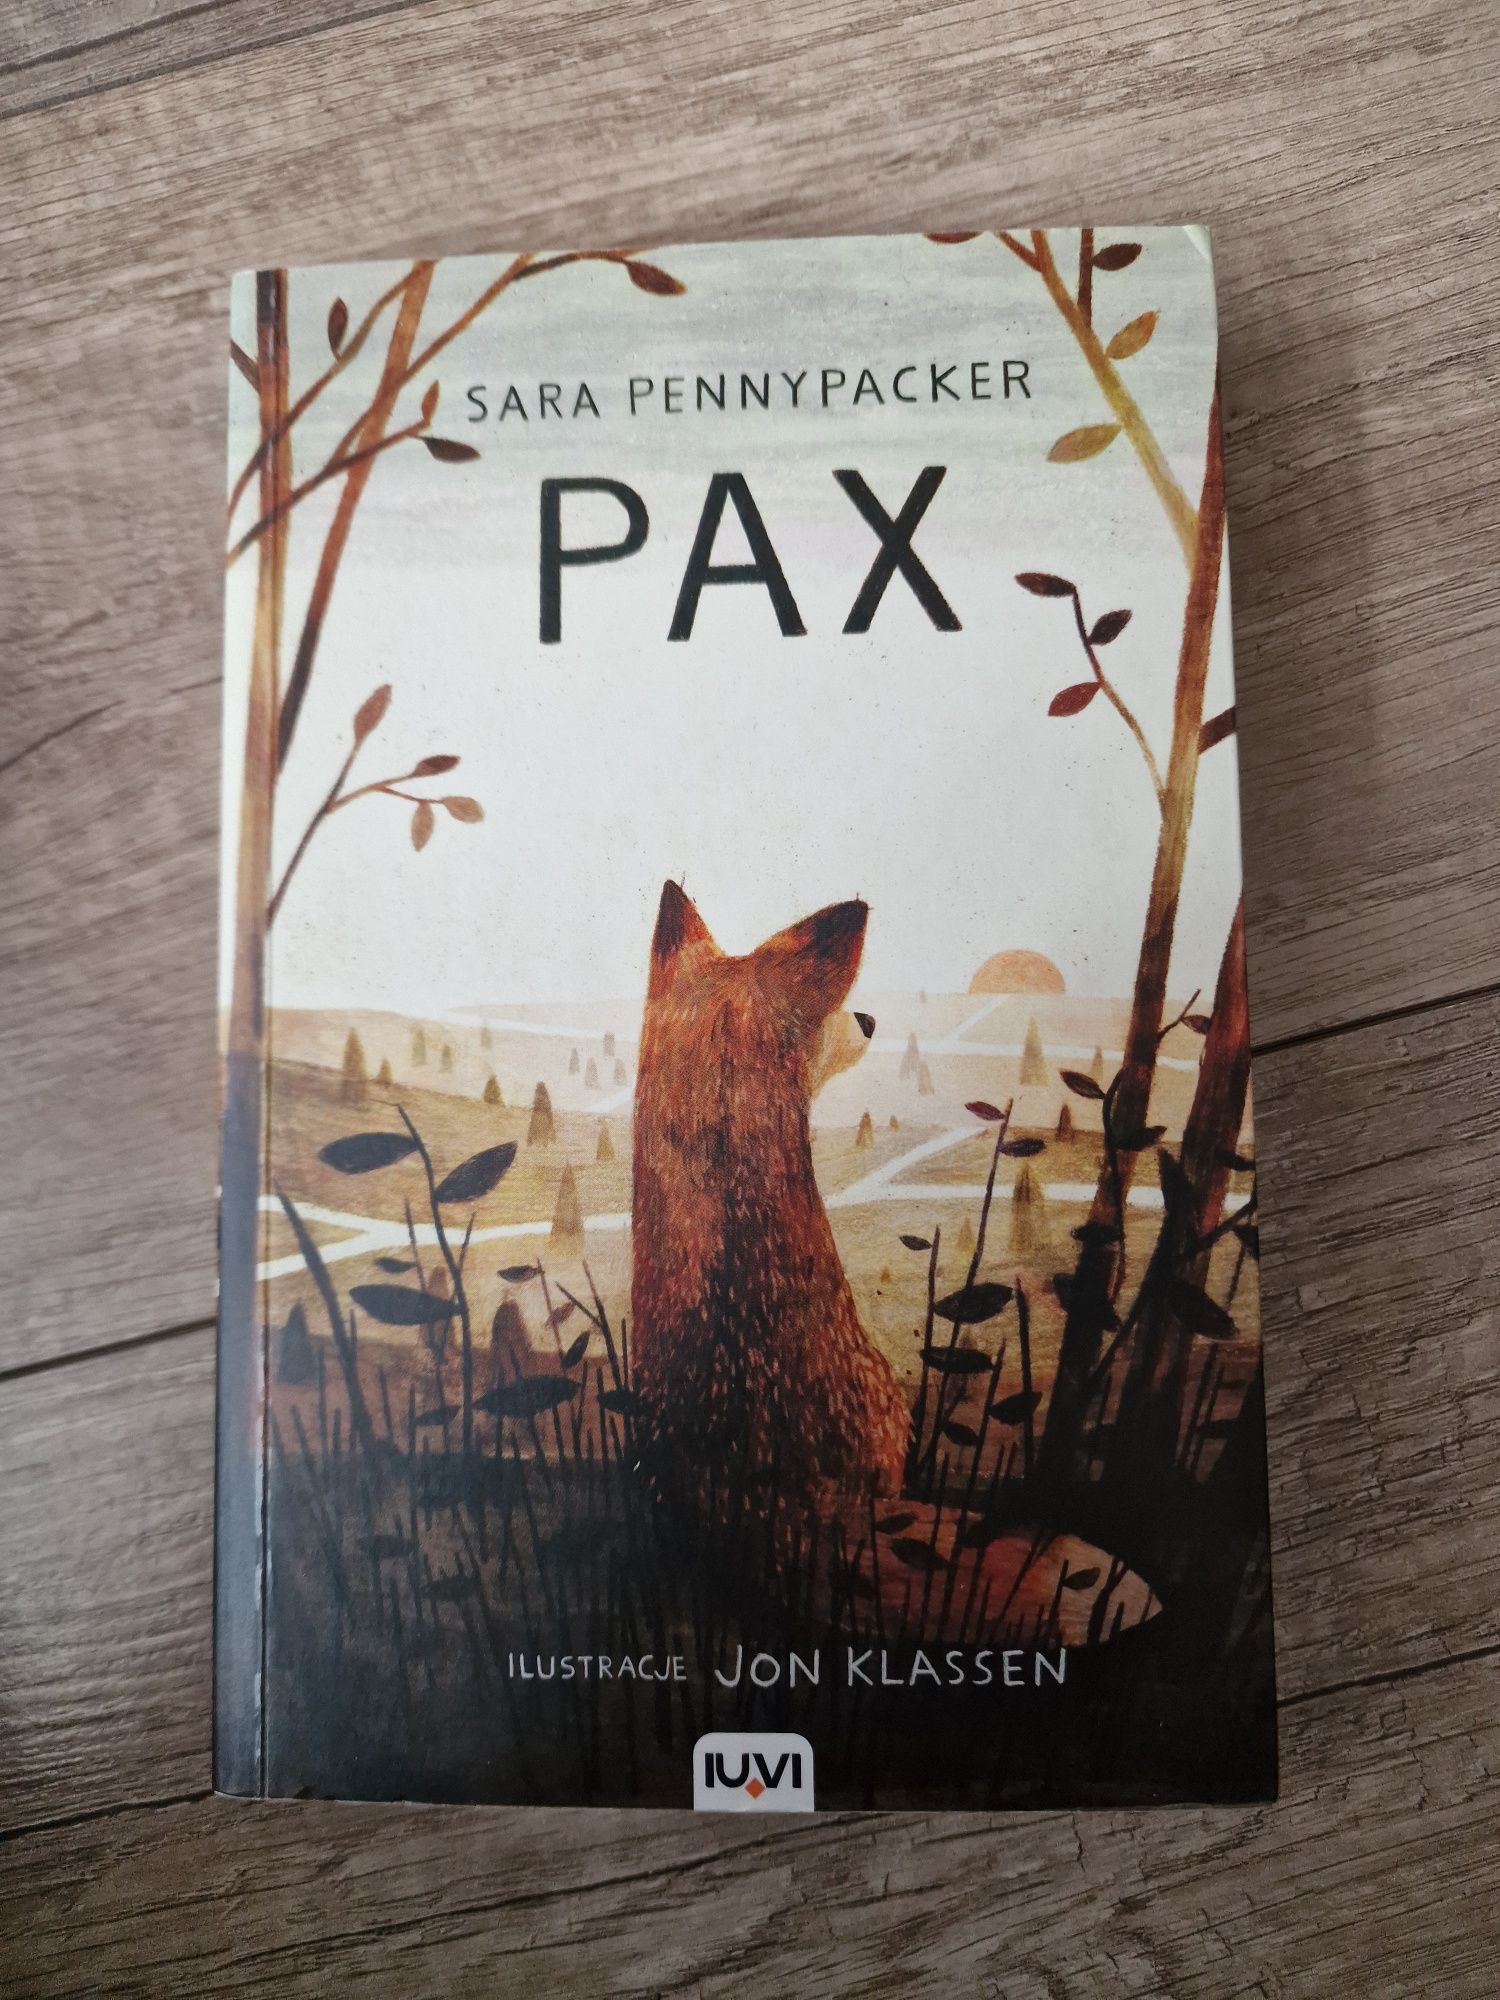 Sara Pennypacker "Pax"